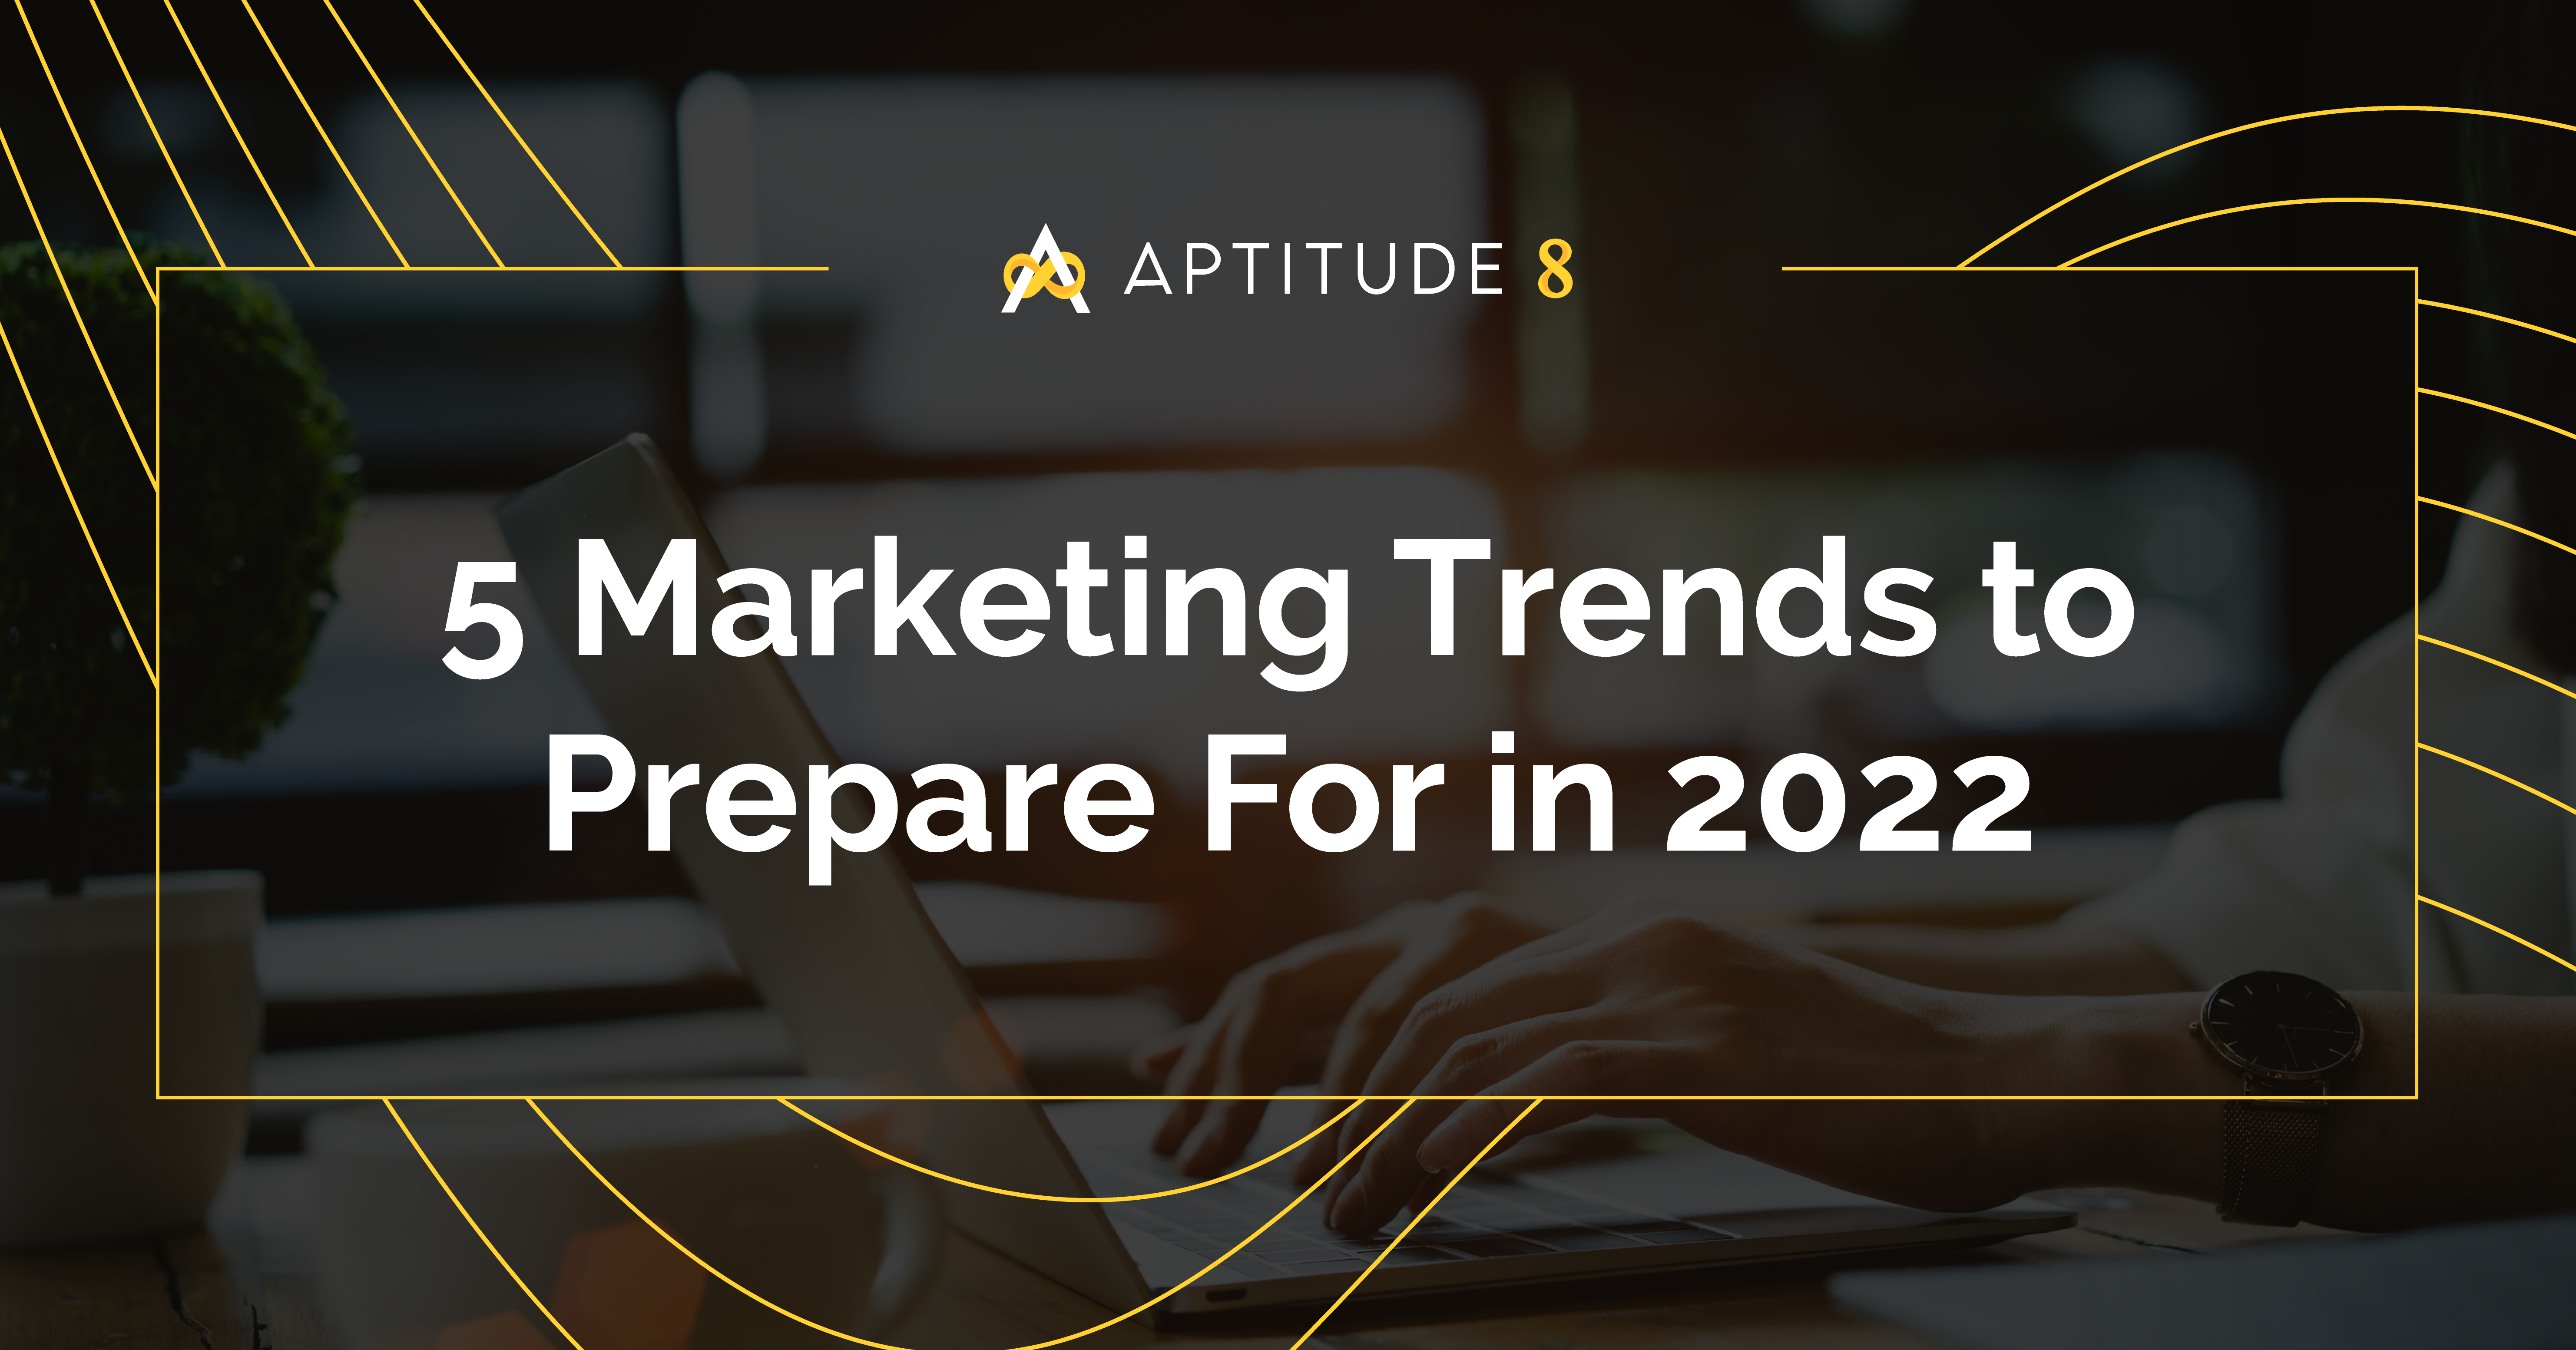 5 Marketing Trends to Prepare For in 2022